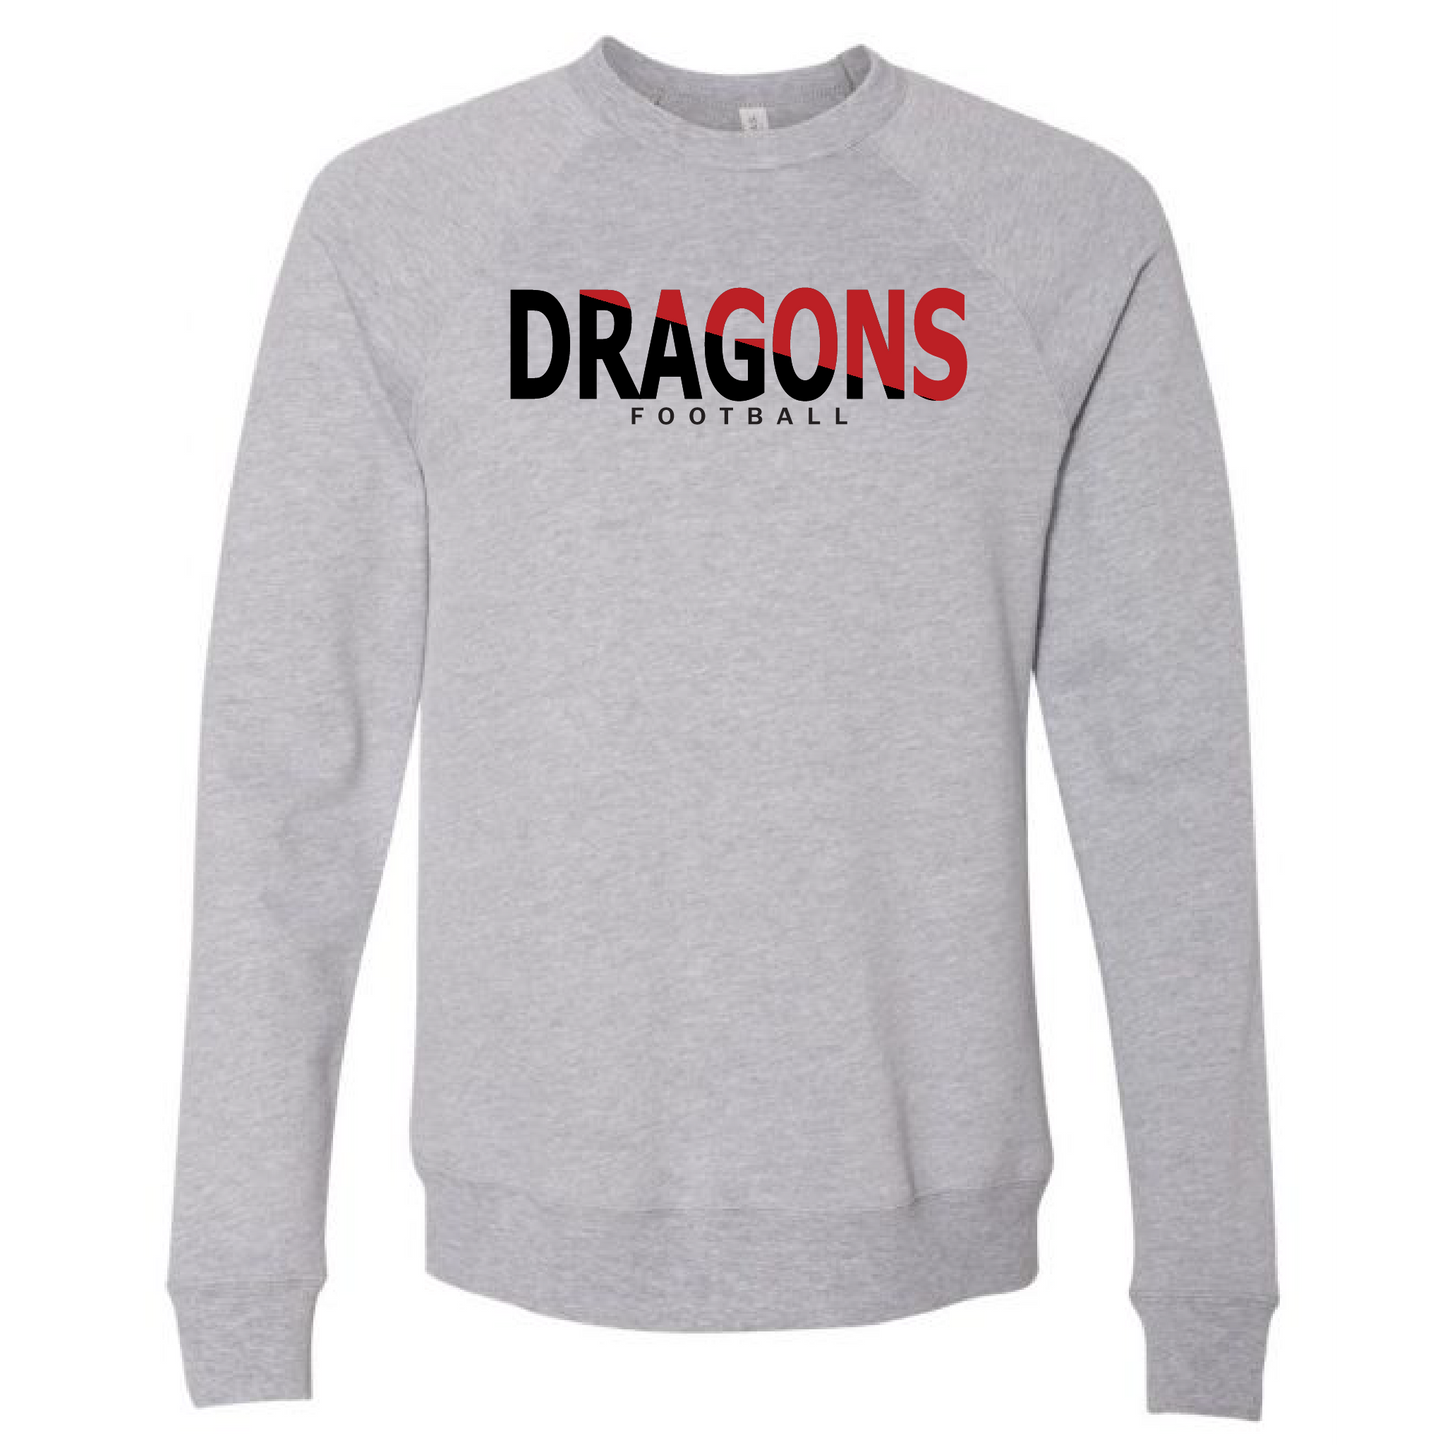 Unisex Sweatshirt - Dragons Football Slashed